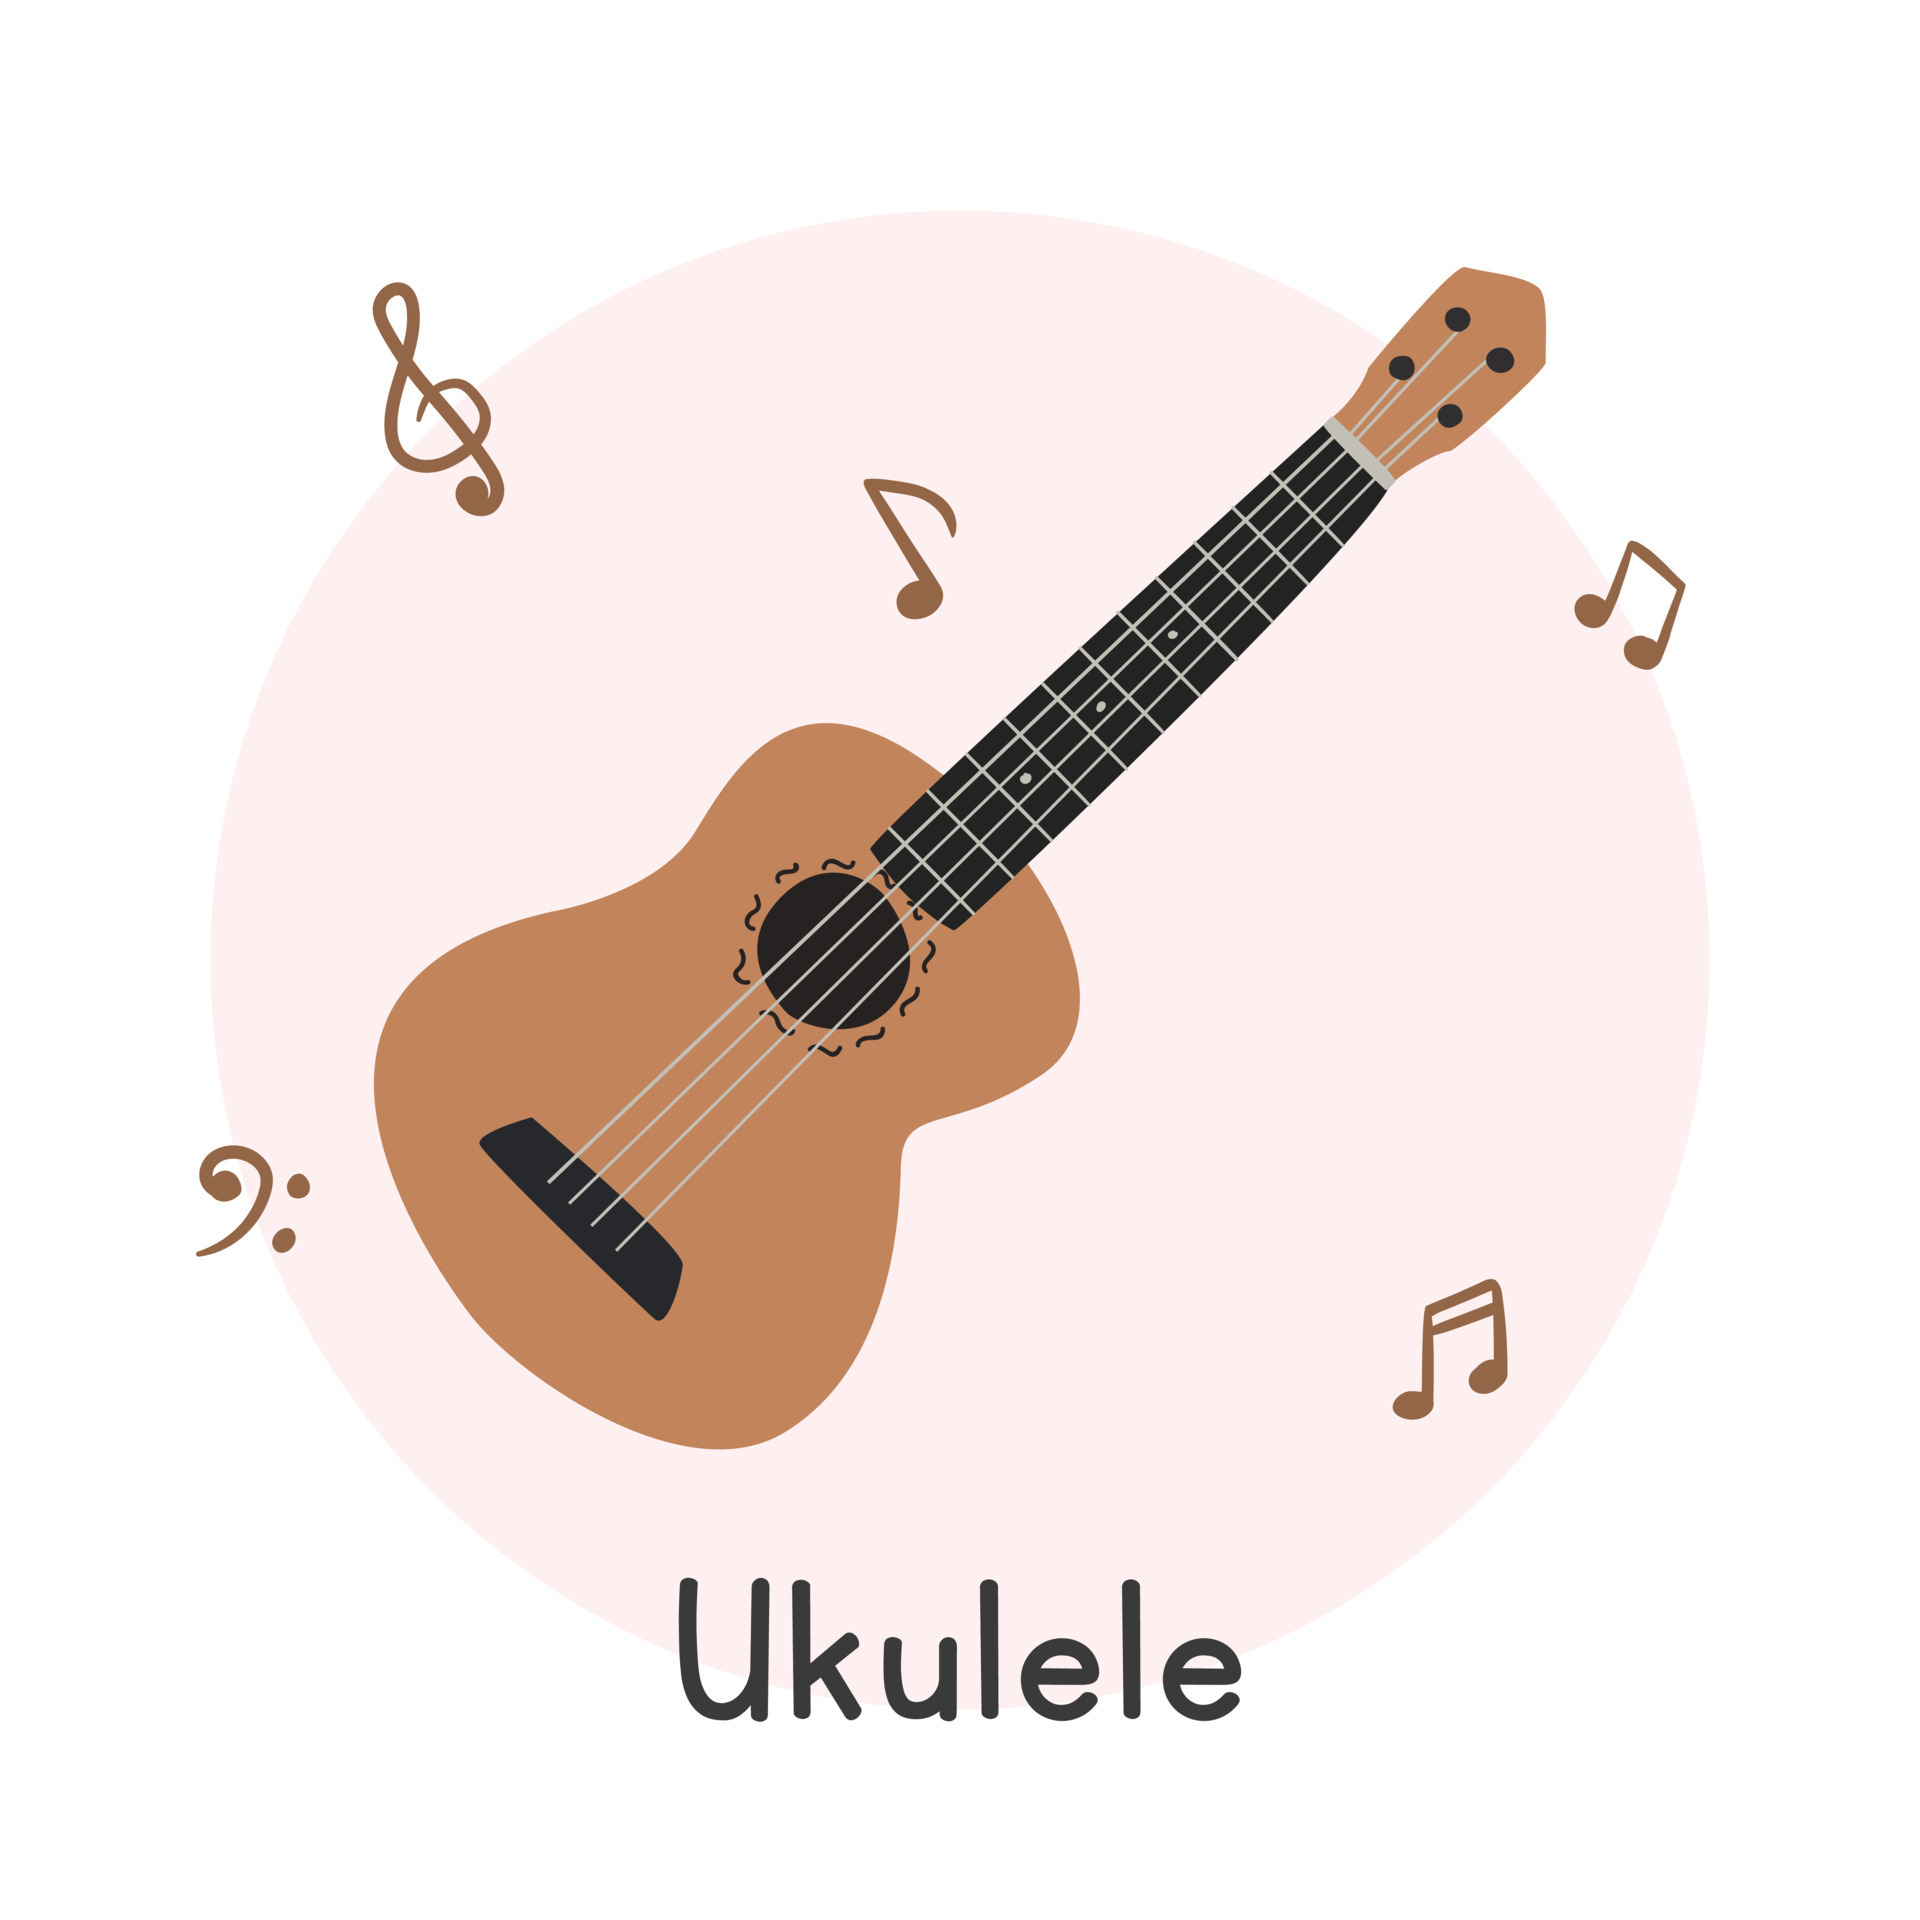 Ukulele clipart cartoon style. Simple cute ukulele string instrument flat  vector illustration. String instrument small guitar hand drawn doodle  style. Brown ukulele vector design 19134290 Vector Art at Vecteezy